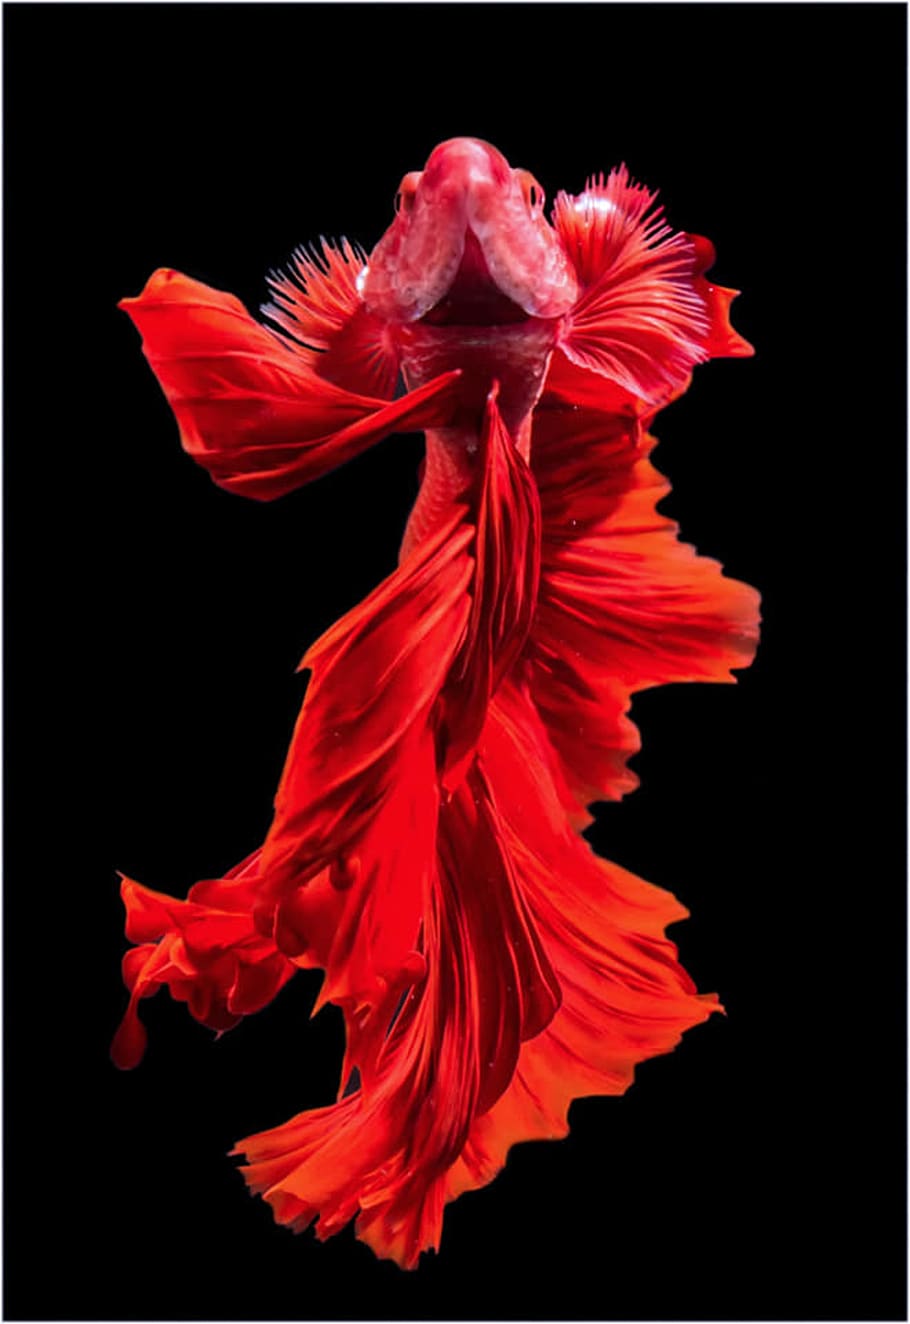 carpa, pez koi, rojo, excelente, animal, fondo negro, foto de estudio, flor, planta floreciendo, fragilidad